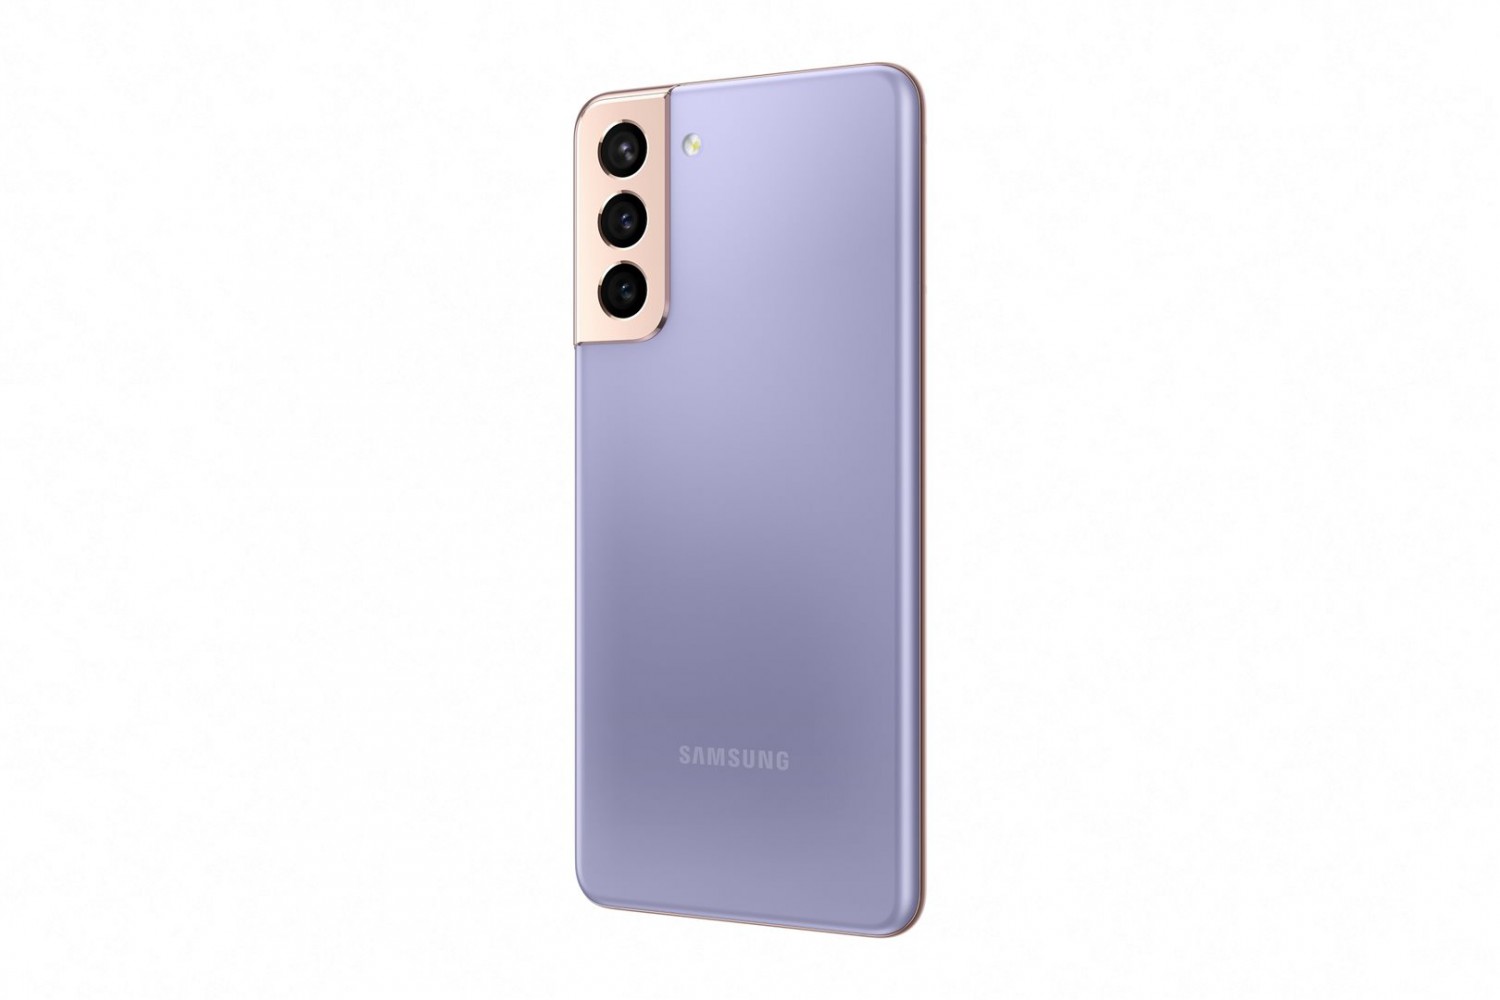 Samsung Galaxy S21+ (SM-G996) 8GB/256GB fialová